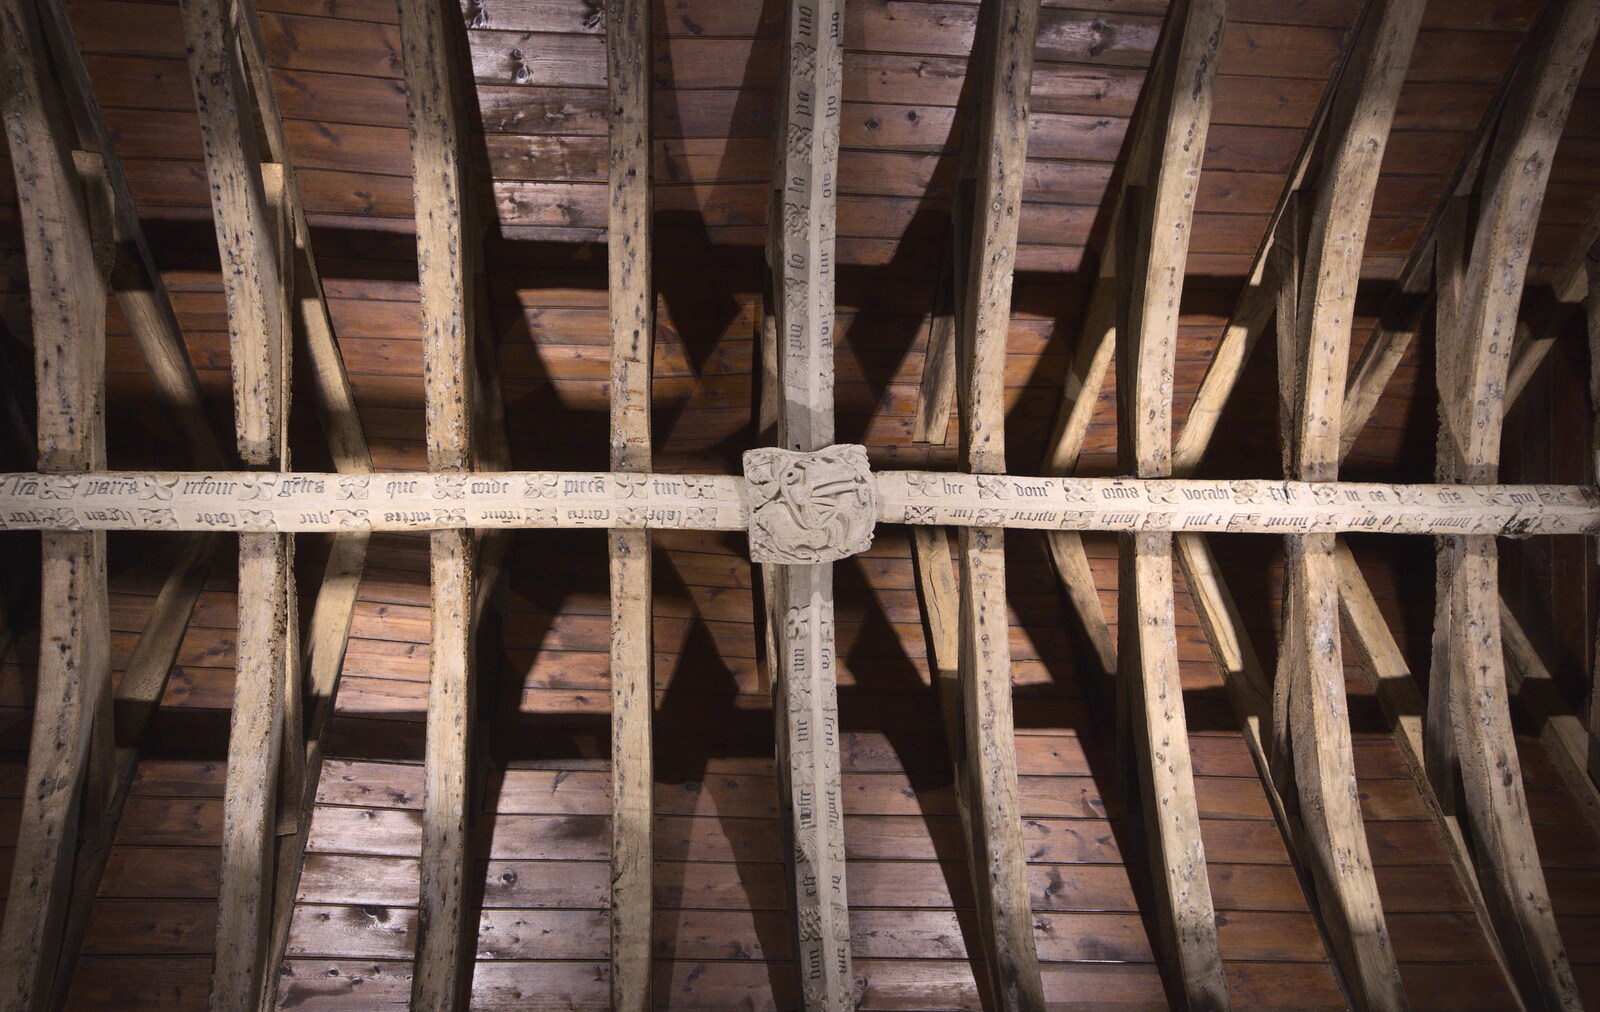 The church's restored Mediaeval roof beams from Christmas at Grandma J's, Spreyton, Devon - 25th December 2018